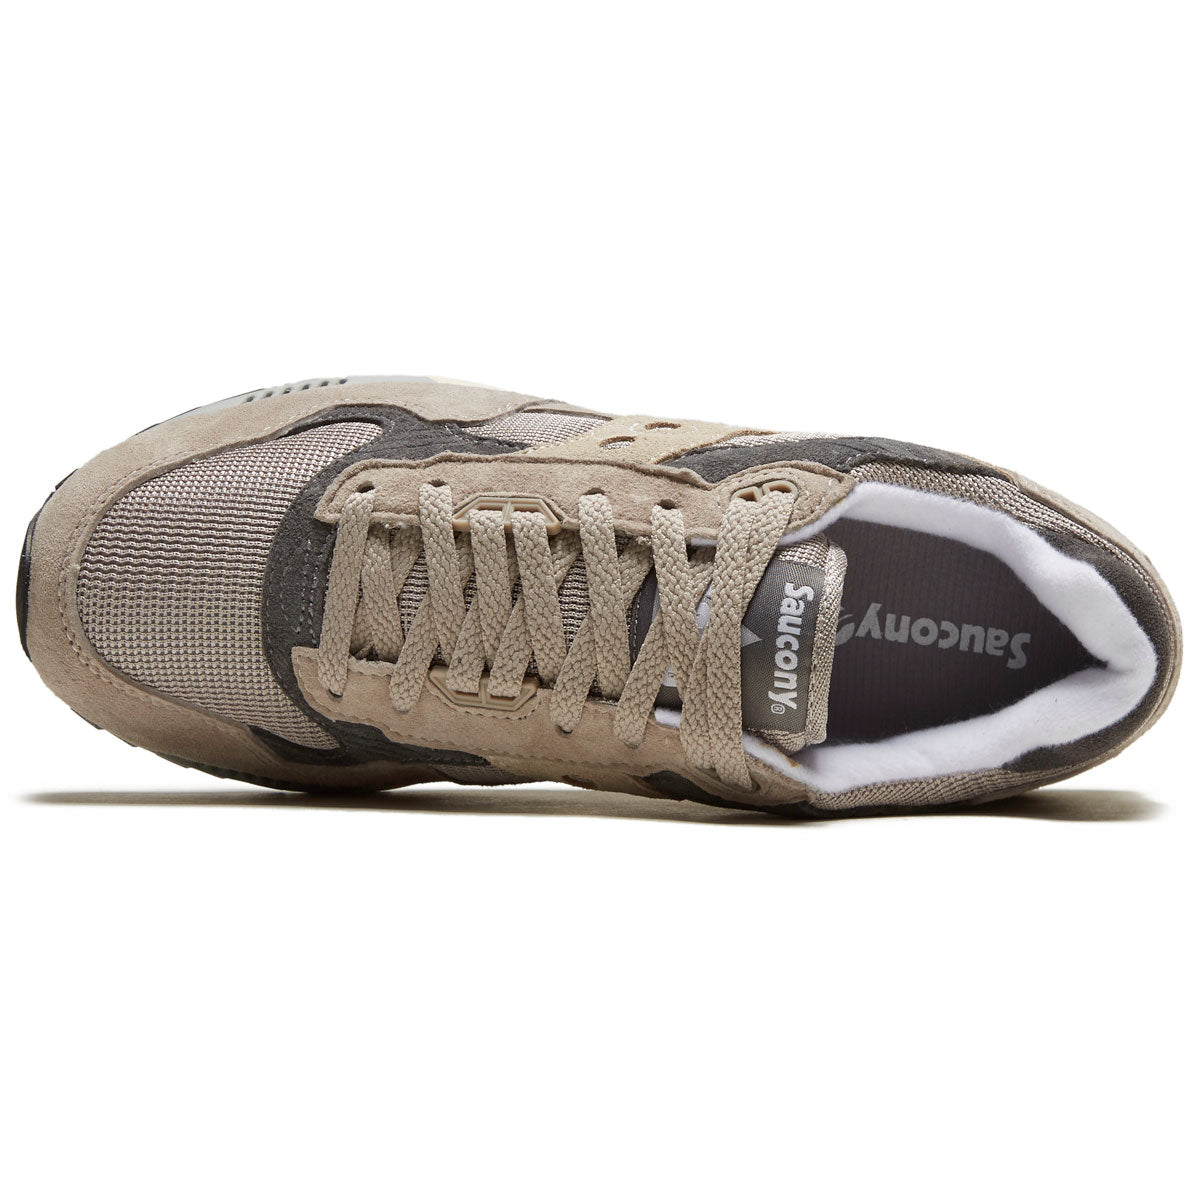 Saucony Shadow 5000 Shoes - Grey/Grey image 3